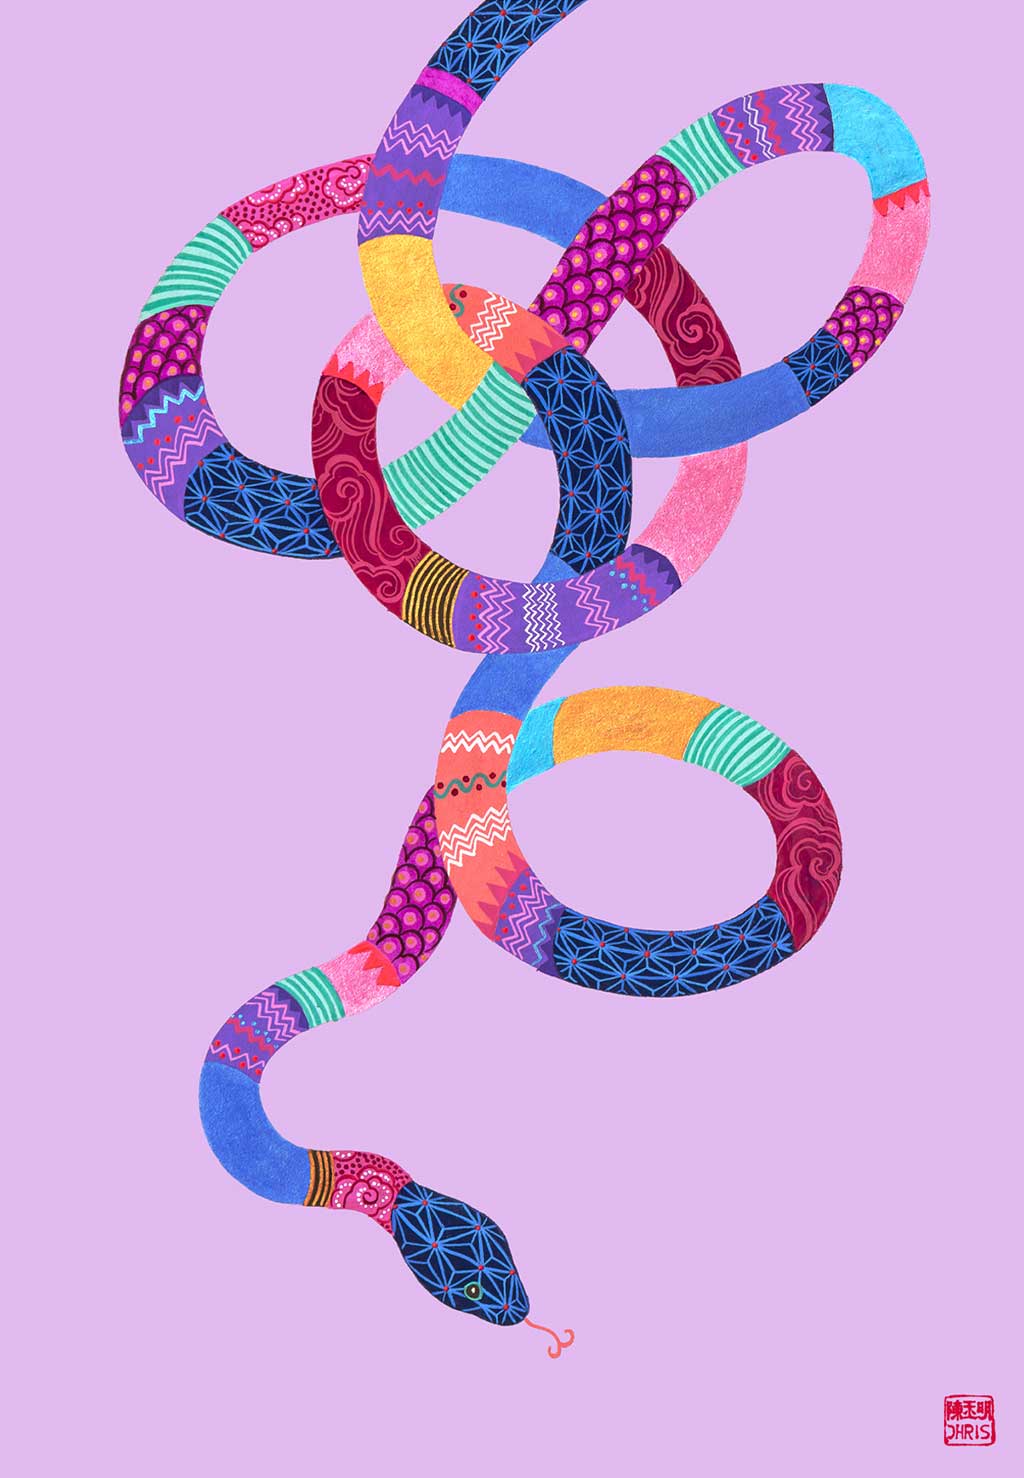 Chinese Zodiac Snake Art Print by Artist Chris Chun